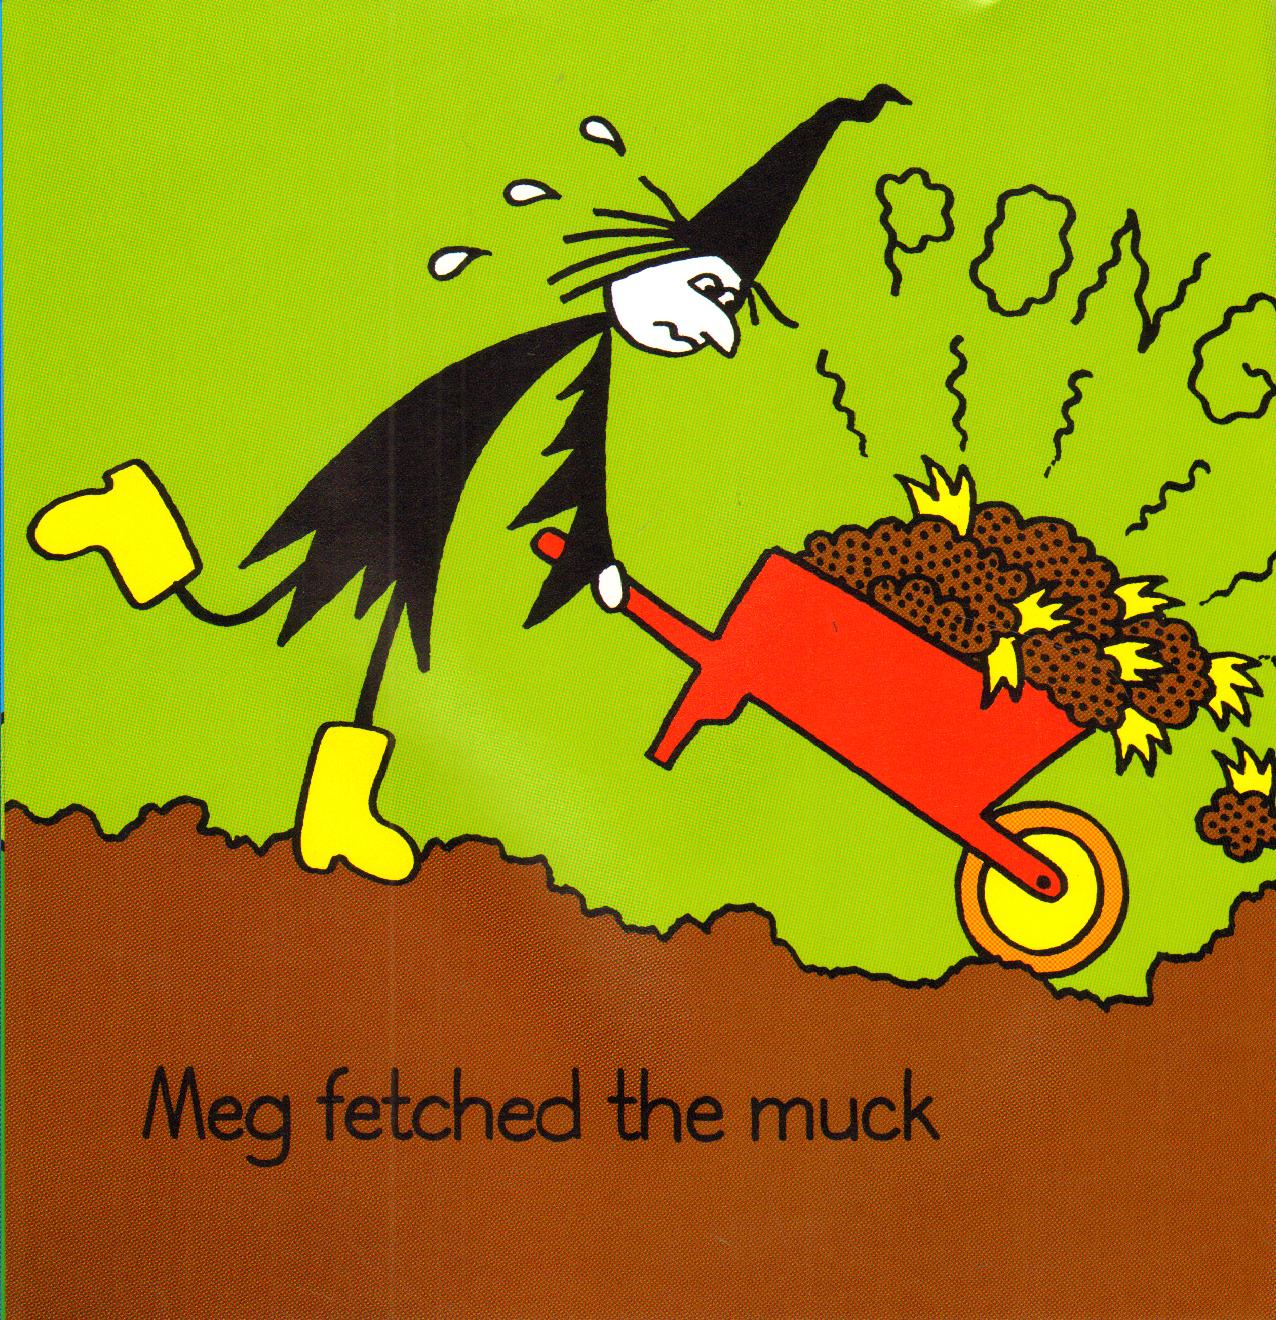 Meg & Mog: Three Terrific Tales